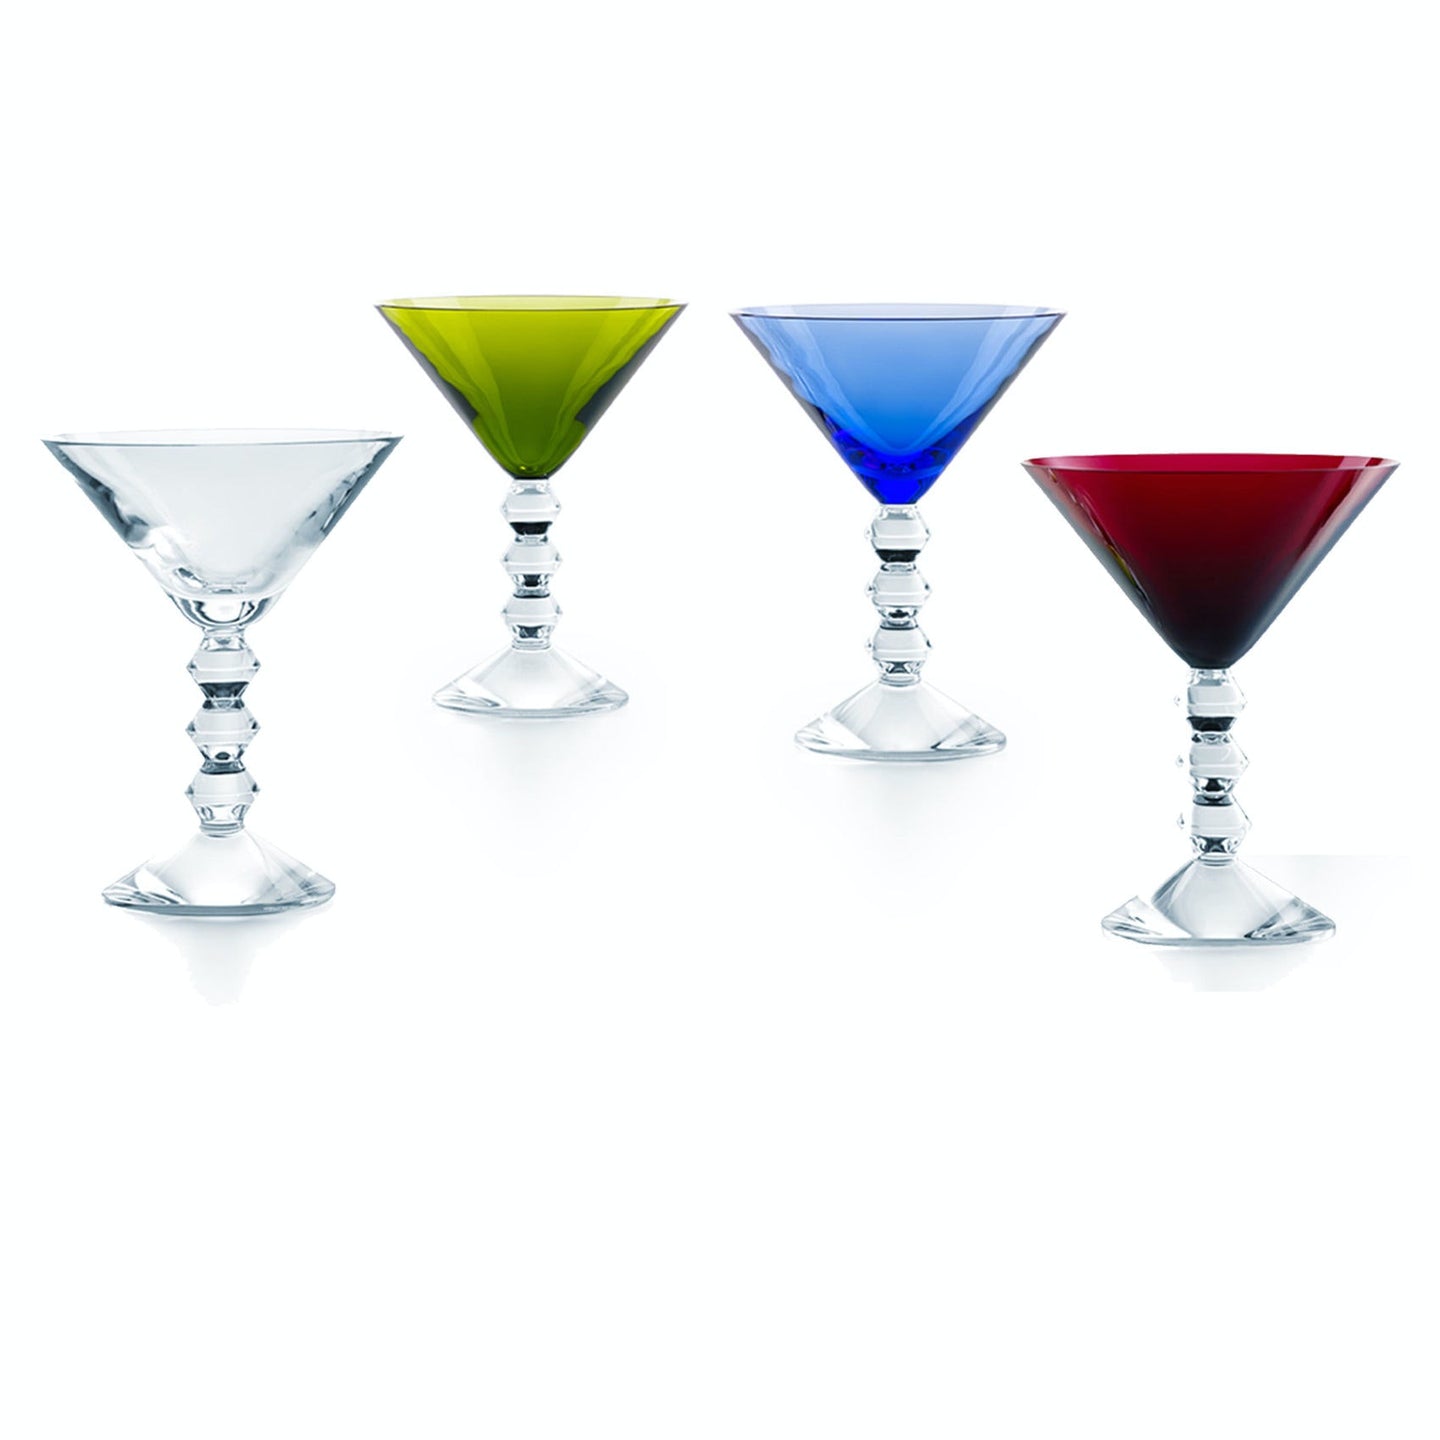 Stunning Cocktail Glasses, Cocktail Gift Sets